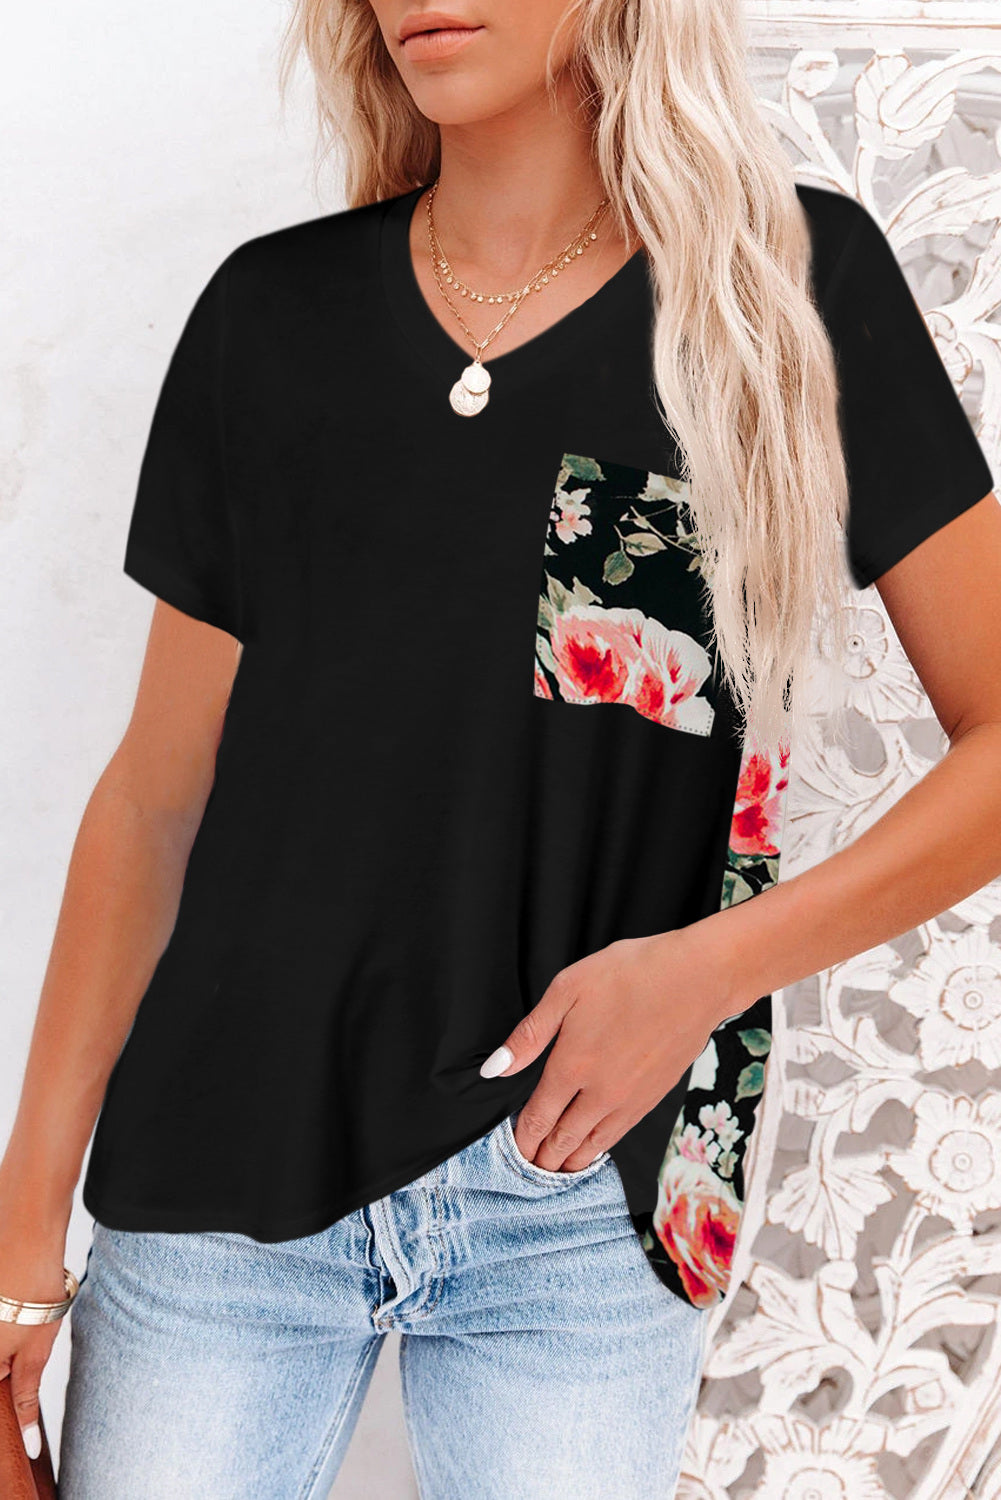 Black Women's Leopard Printed Short Sleeve T-Shirt Blouse LC253578-202